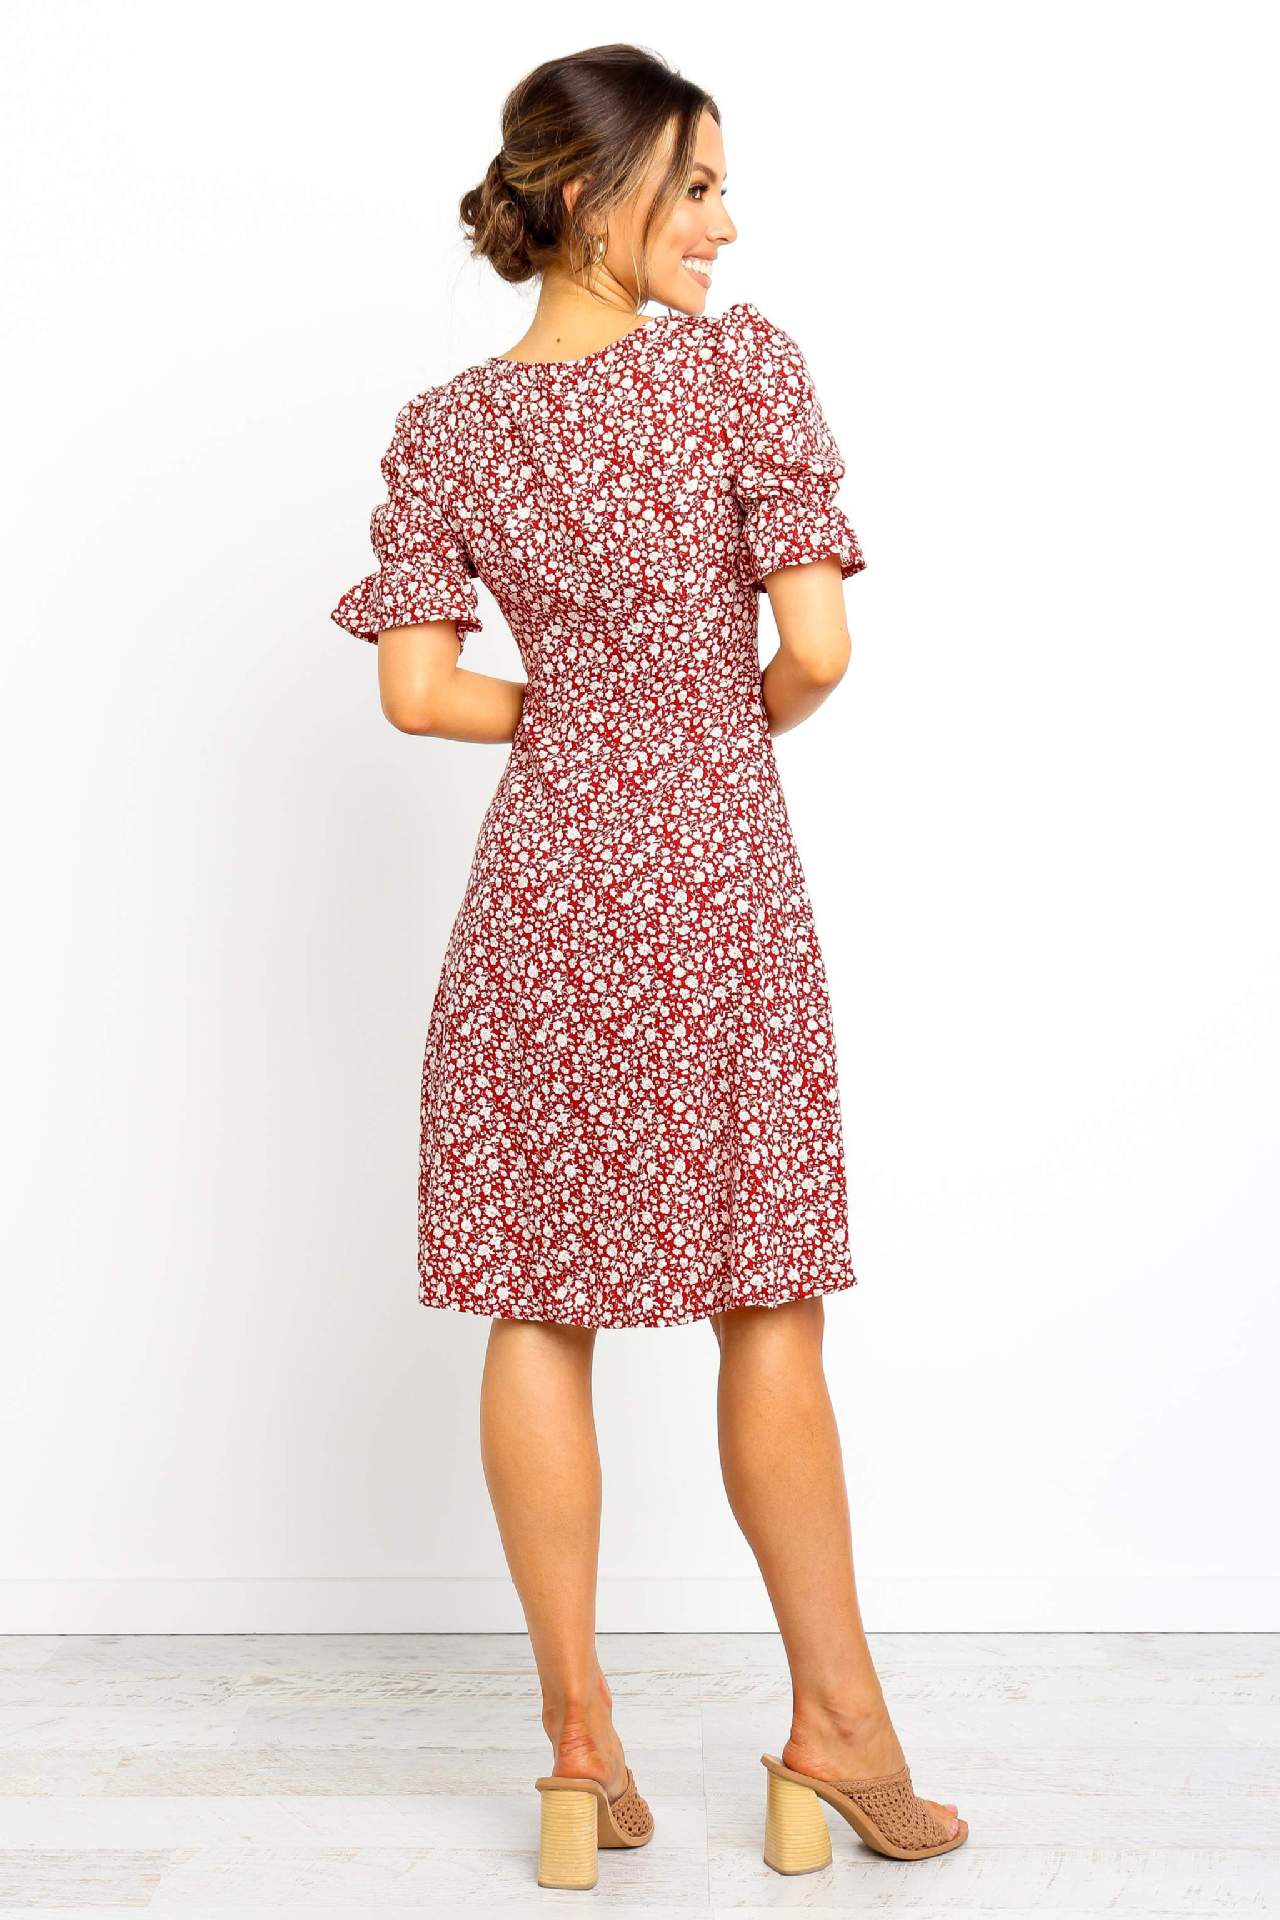 new short-sleeved summer dress NSCX25026